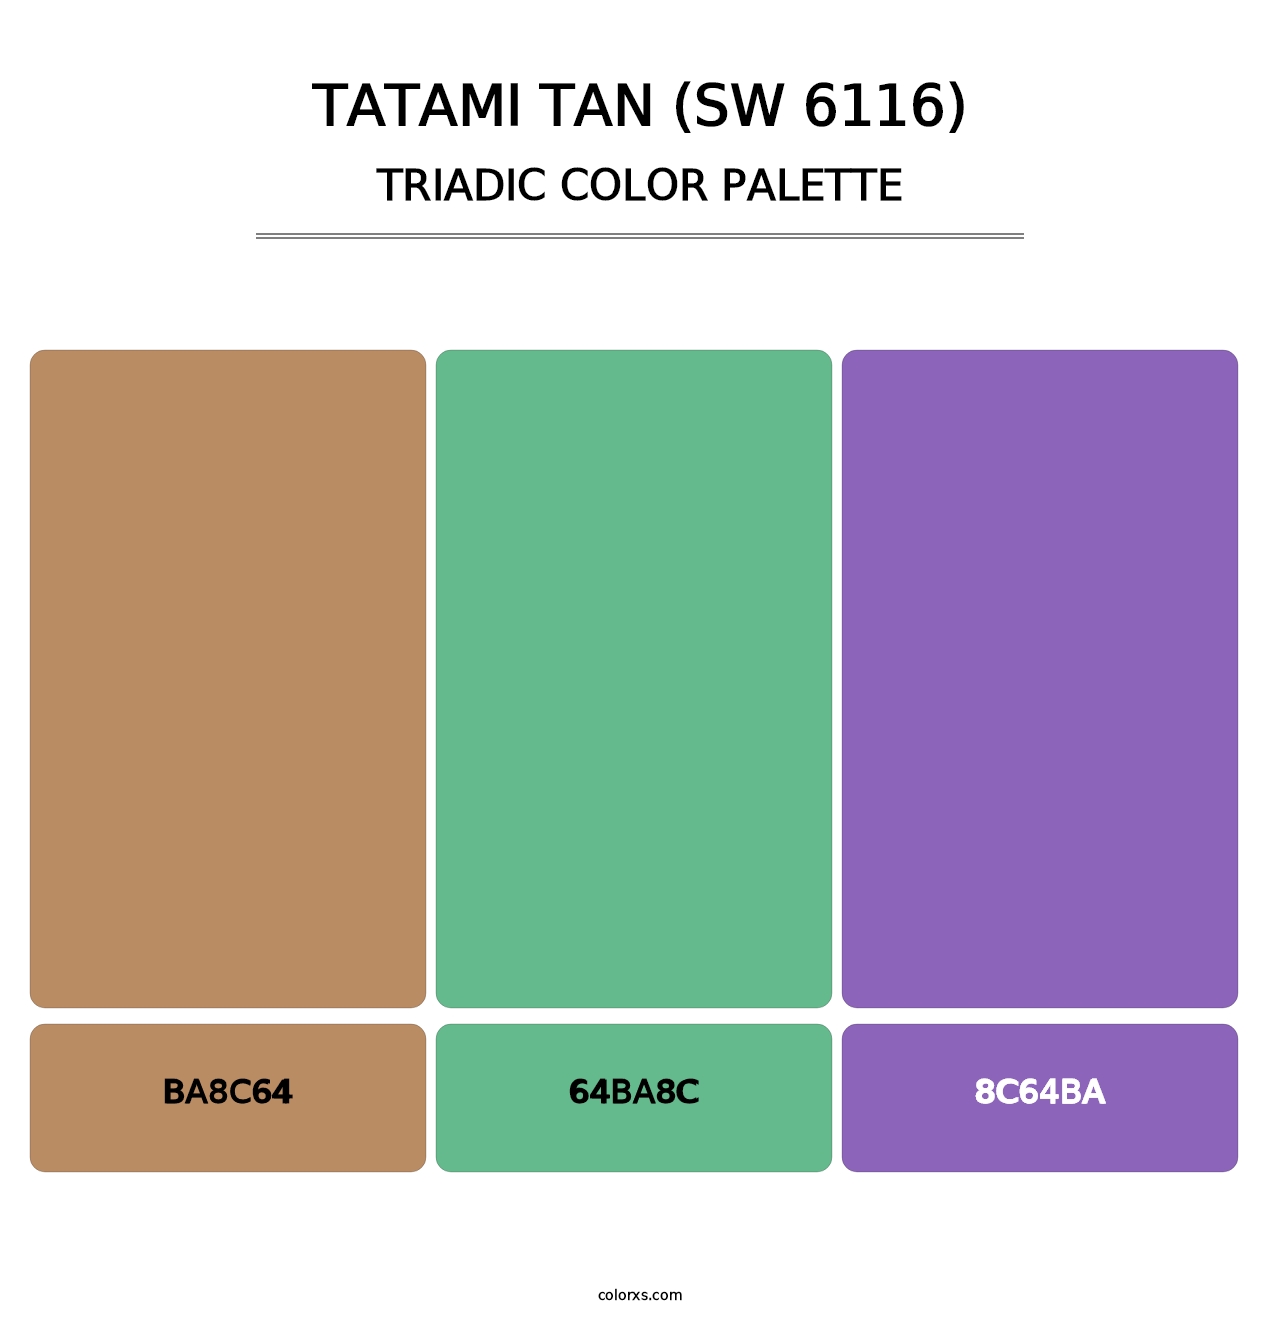 Tatami Tan (SW 6116) - Triadic Color Palette